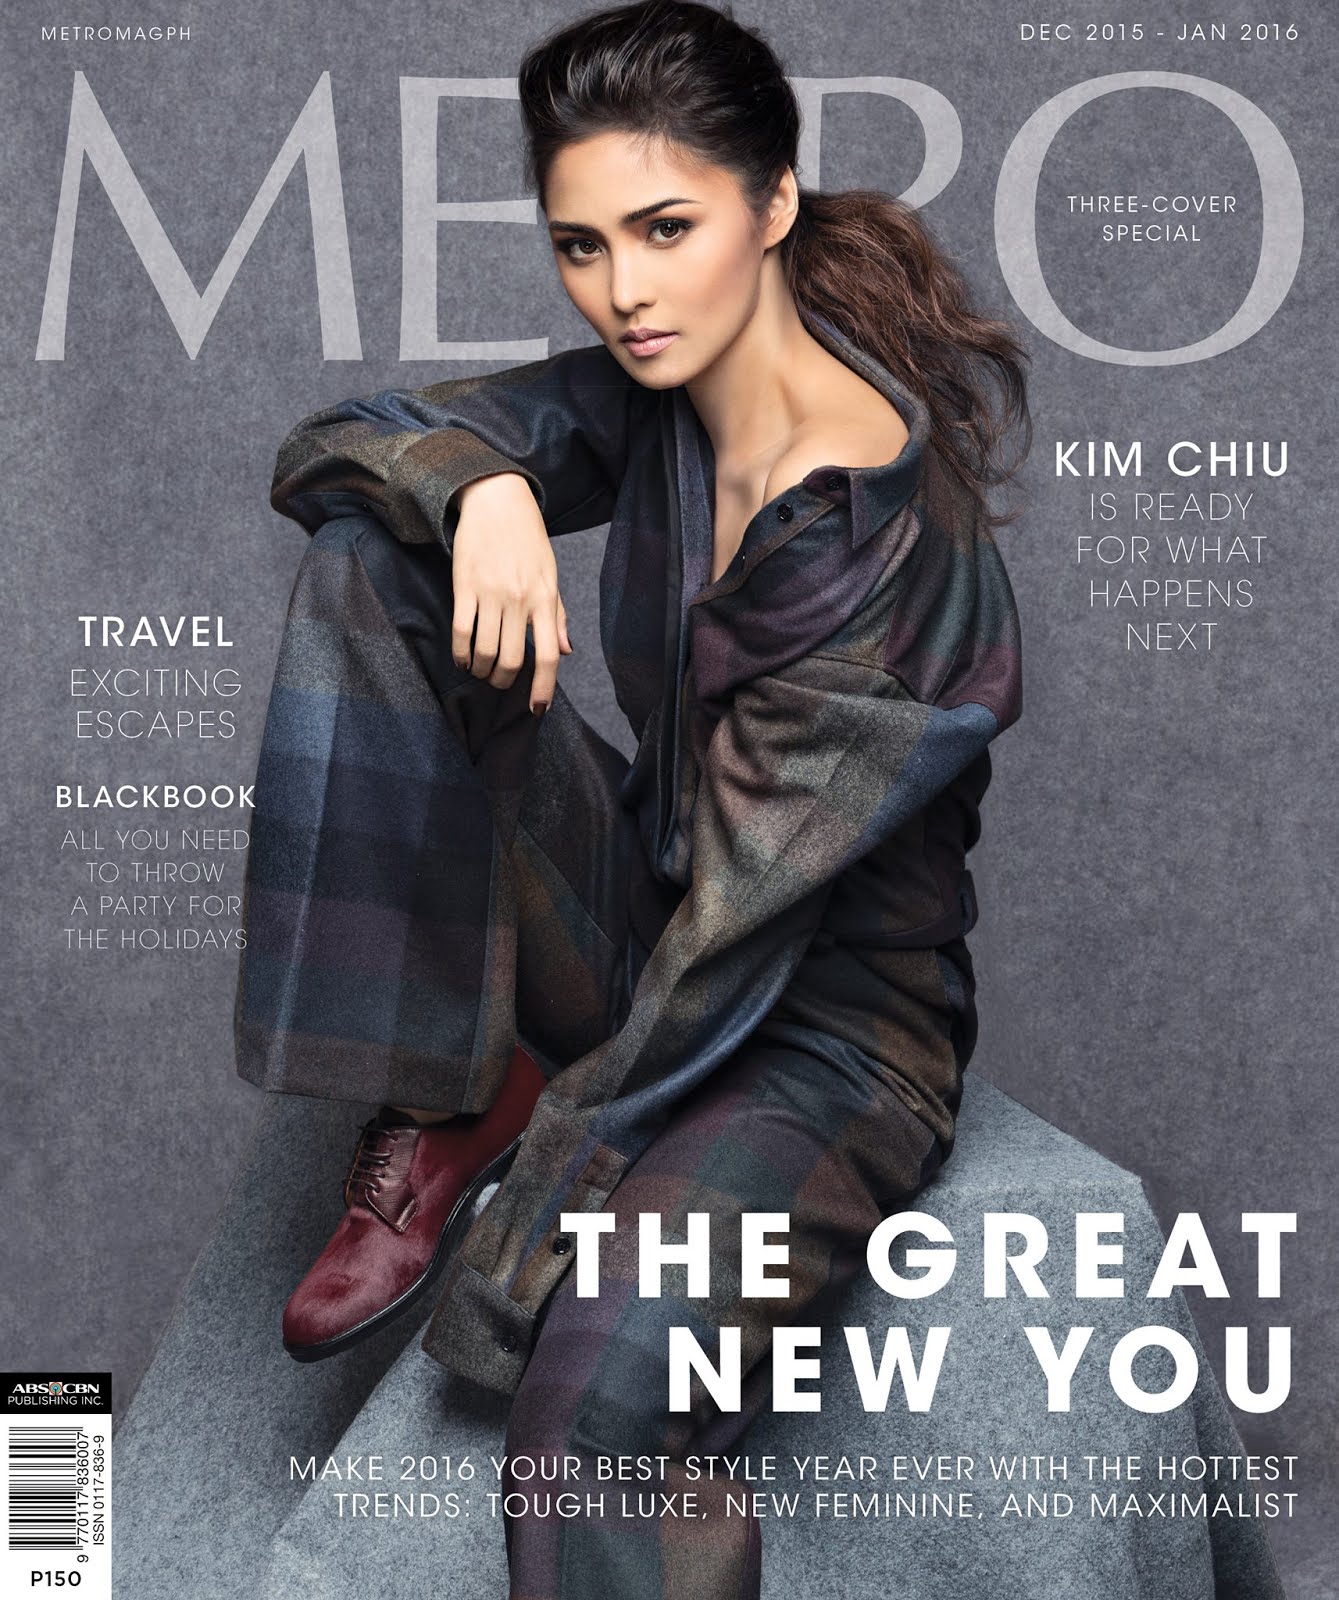 Kim Chui Metro Magazine December 2015 to January 2016 Cover Girl OMG